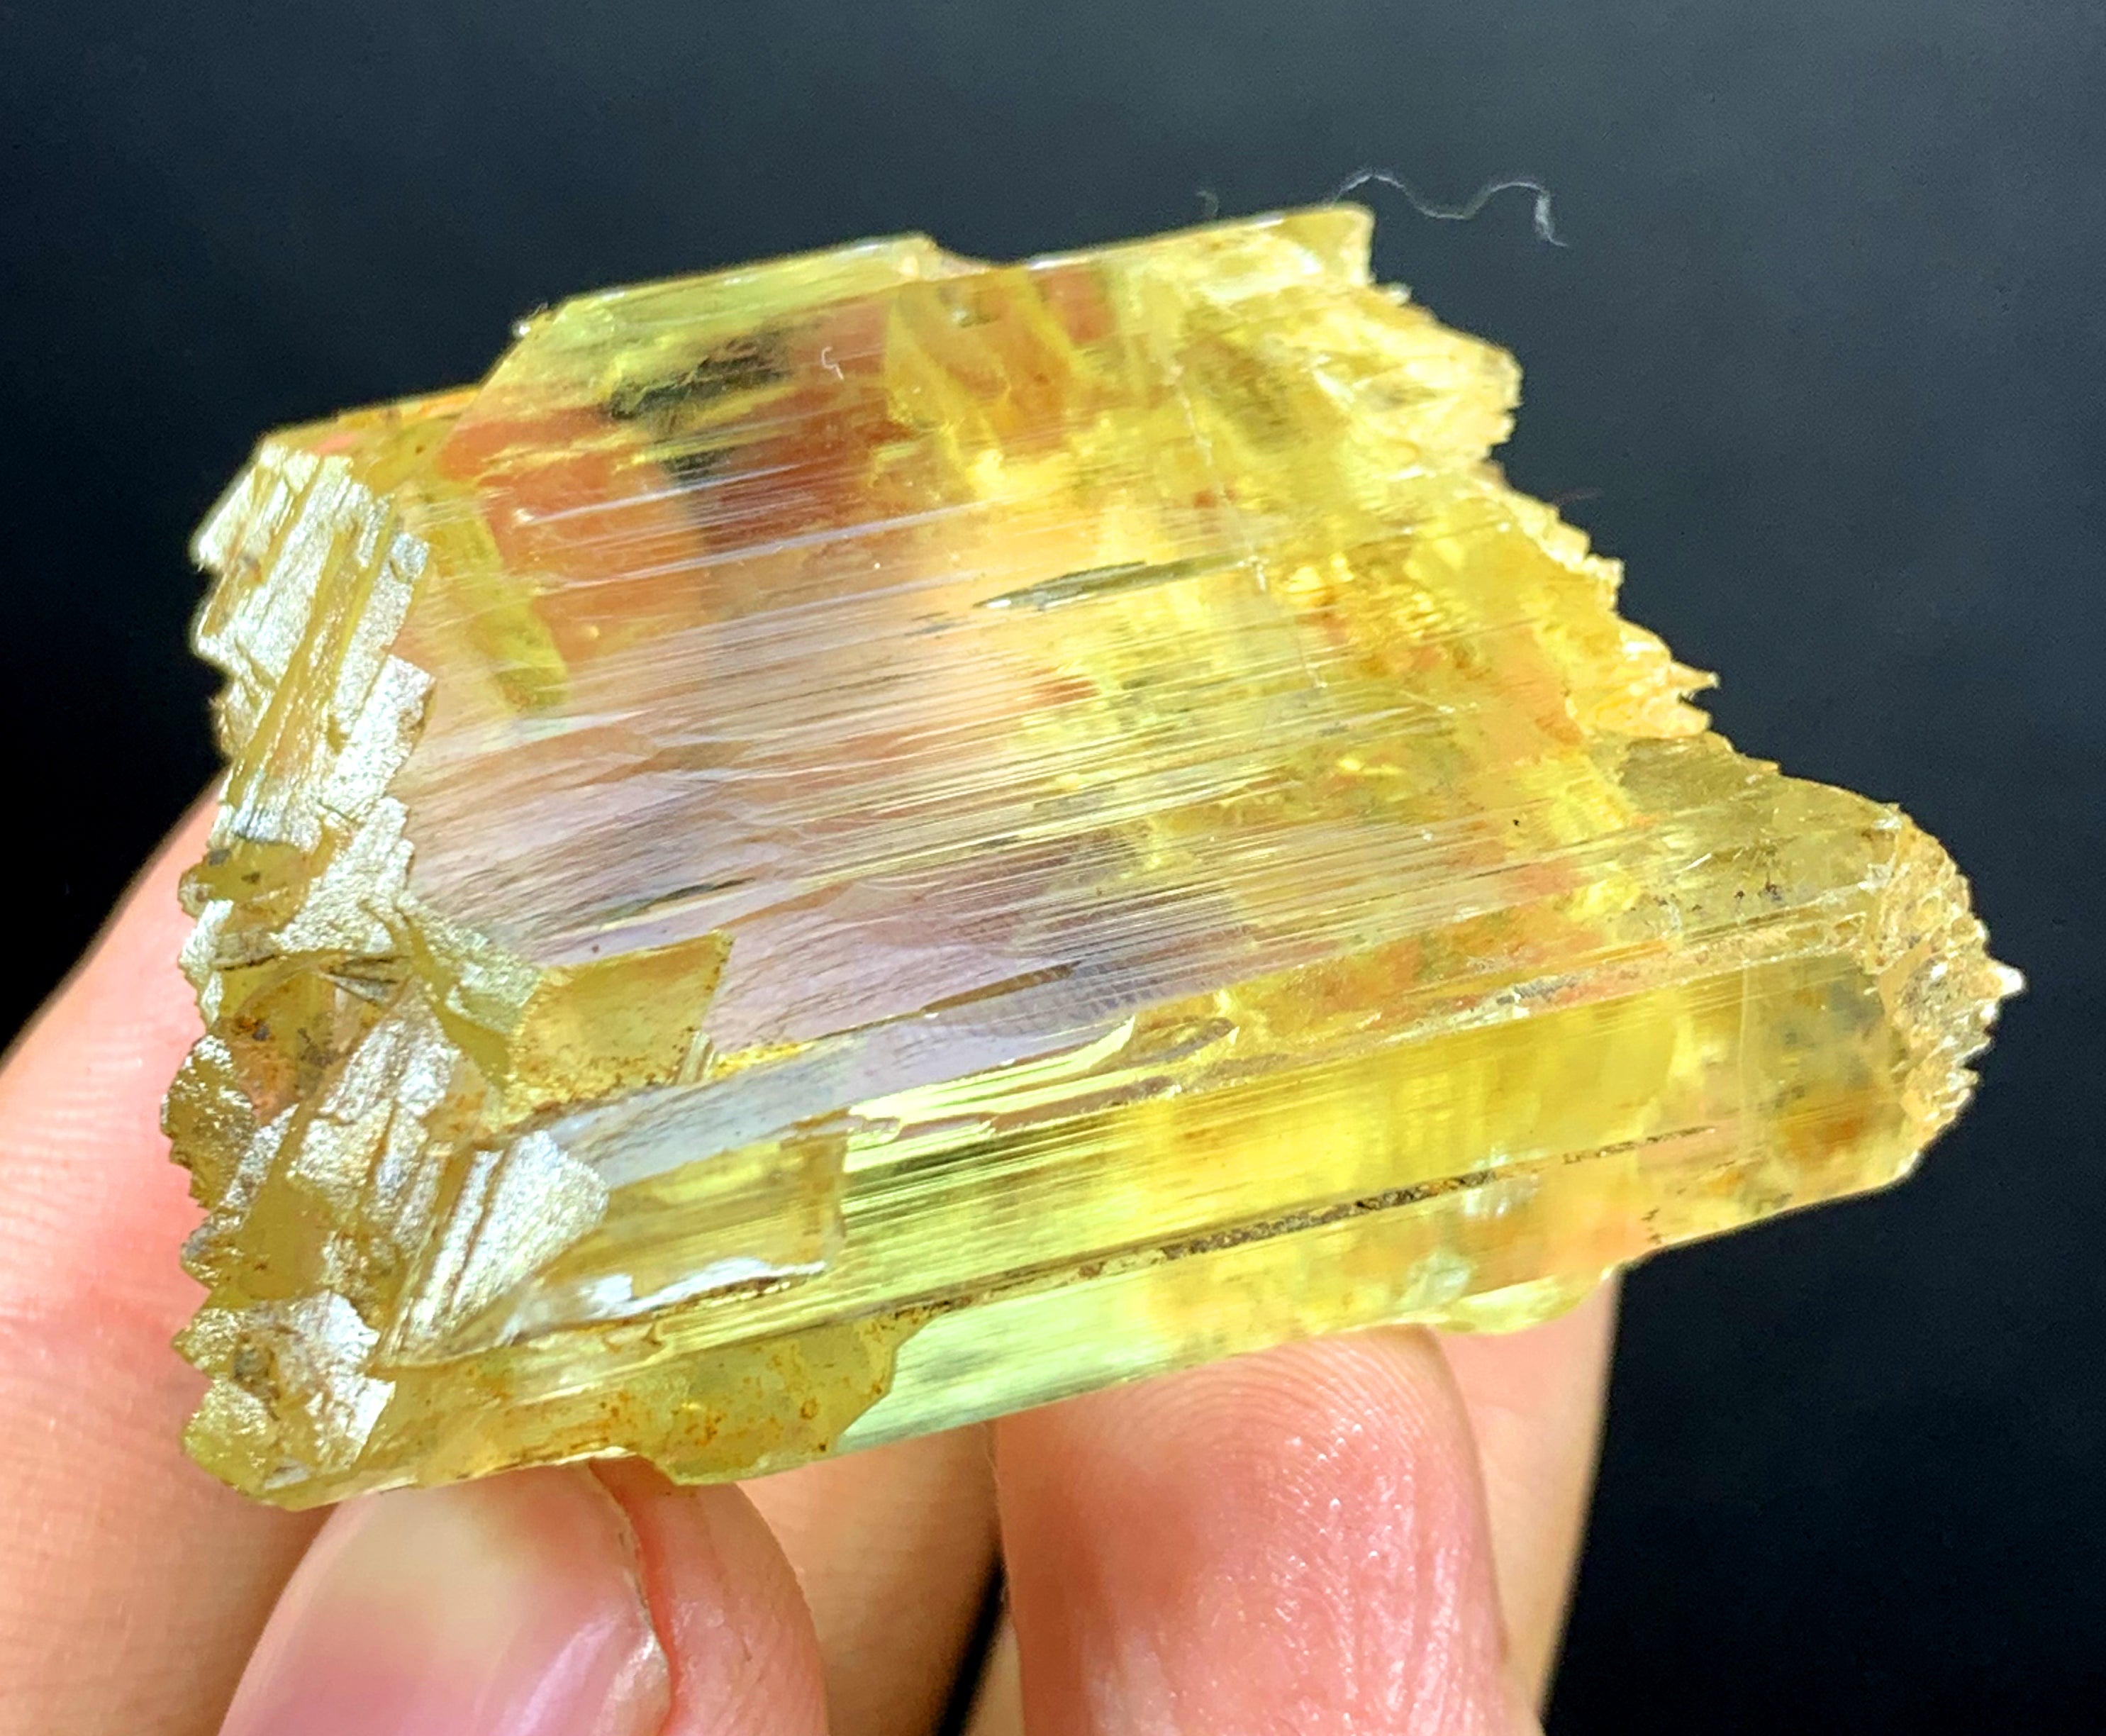 Transparent Yellow Color Triphane Kunzite Crystal, Etched Kunzite, Raw Mineral, Kunzite Crystal from Afghanistan - 57 gram